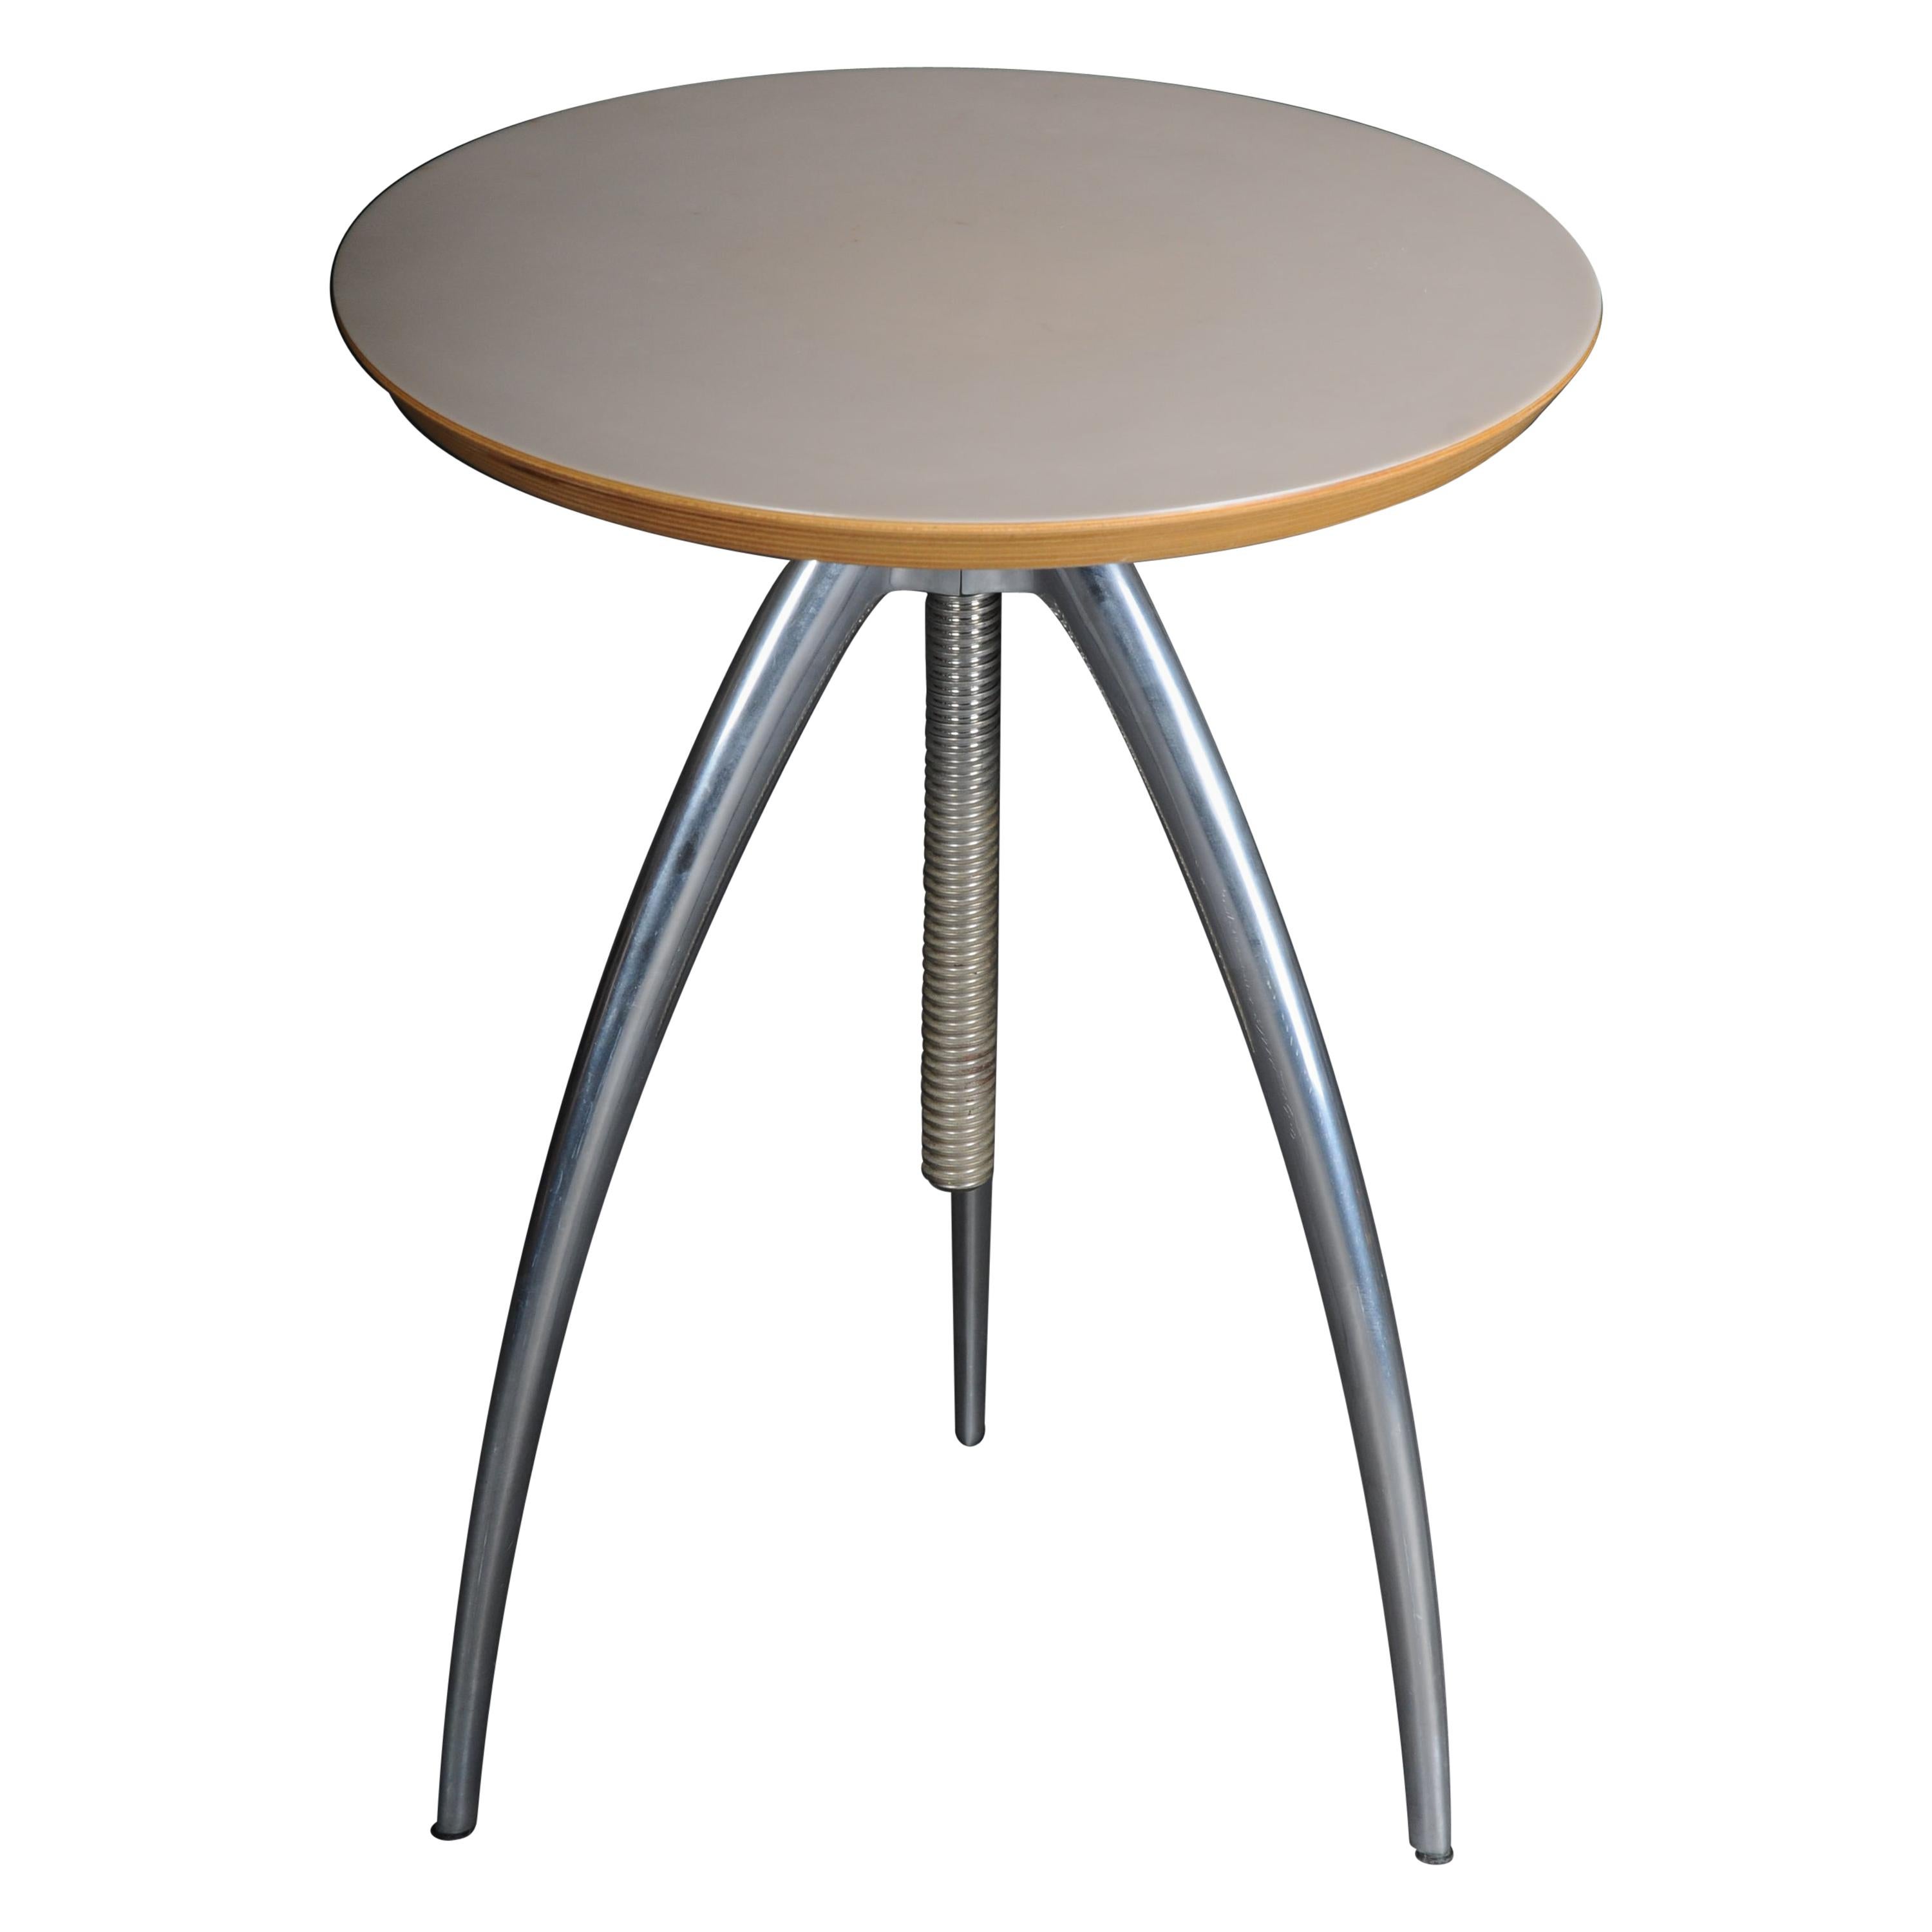 Designer Side Table / Table Philippe Starck Driade Vicieuse Ubik Aleph